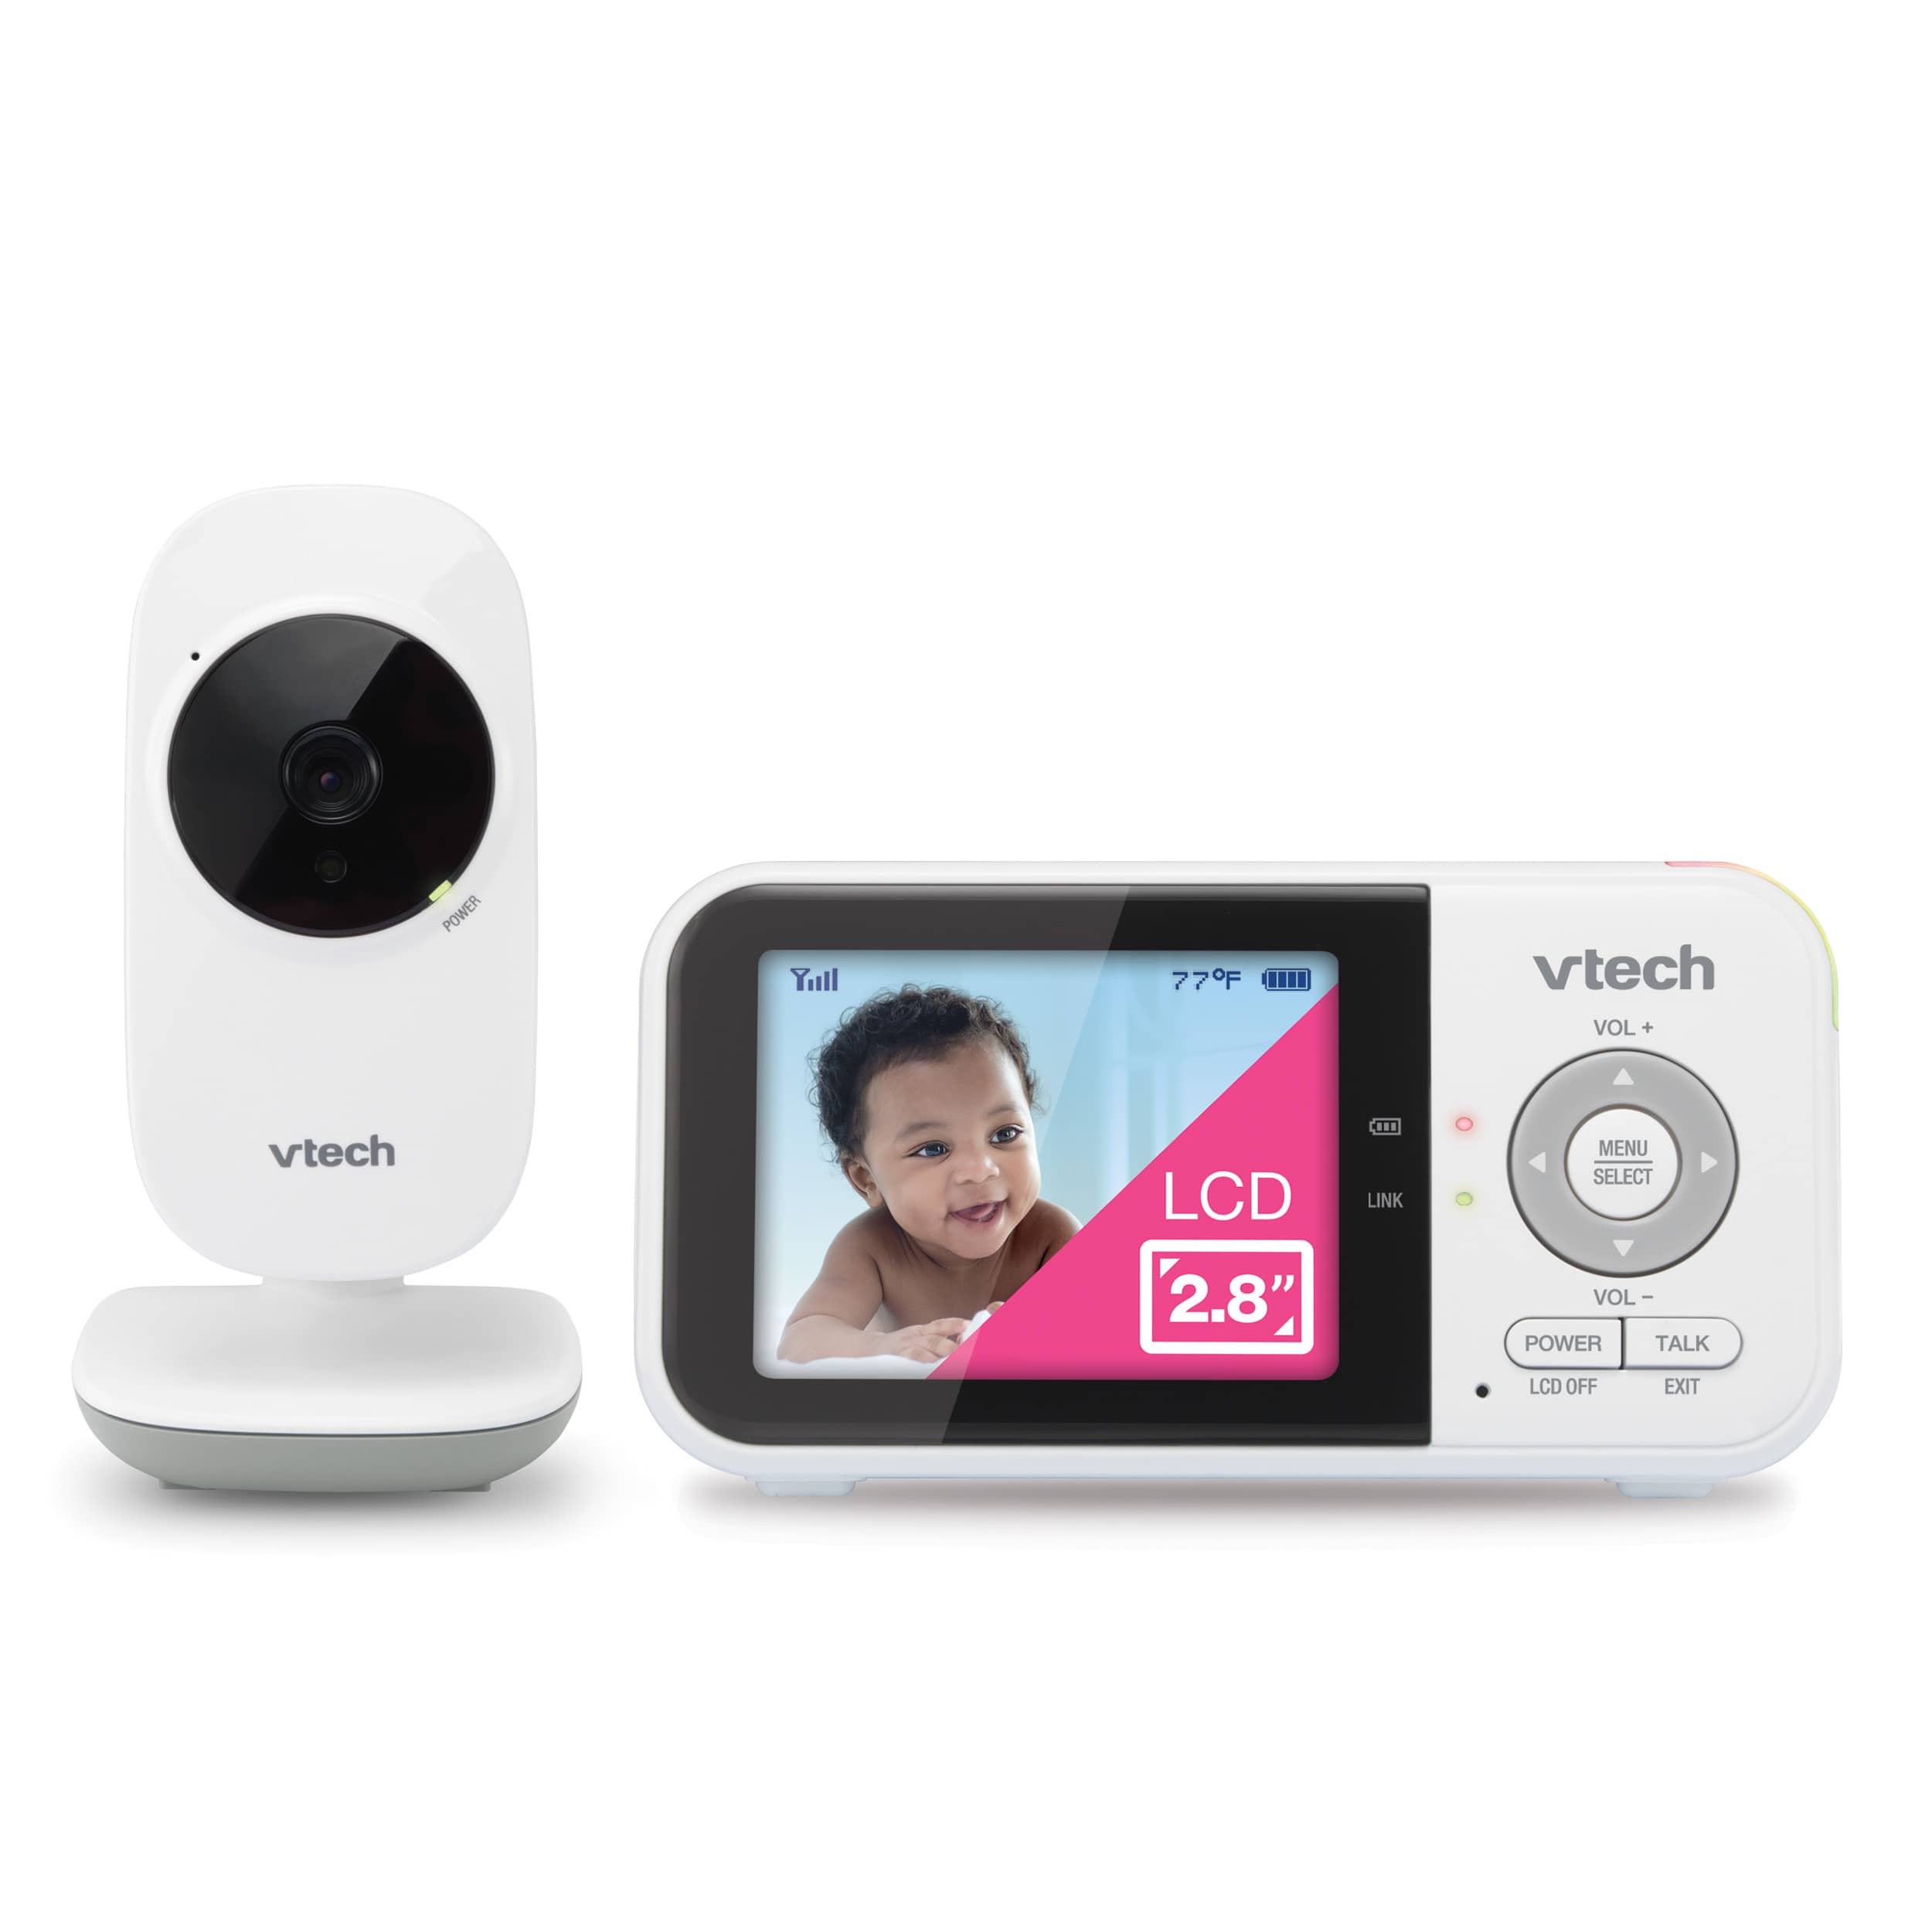 2.8" Digital Video Baby Monitor, White - view 1